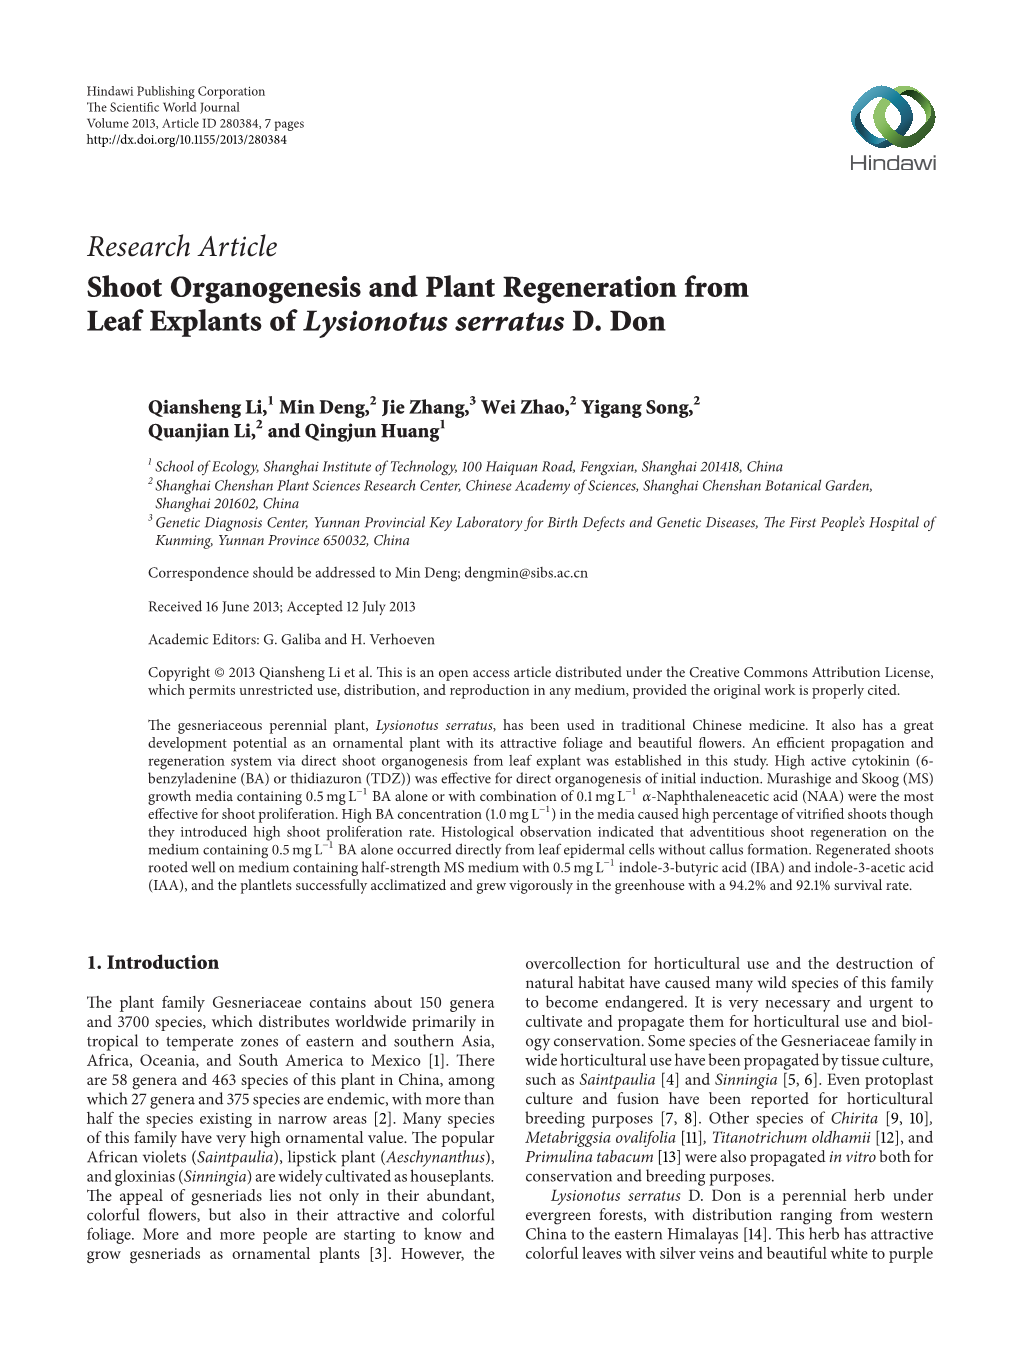 Shoot Organogenesis and Plant Regeneration from Leaf Explants of Lysionotus Serratus D